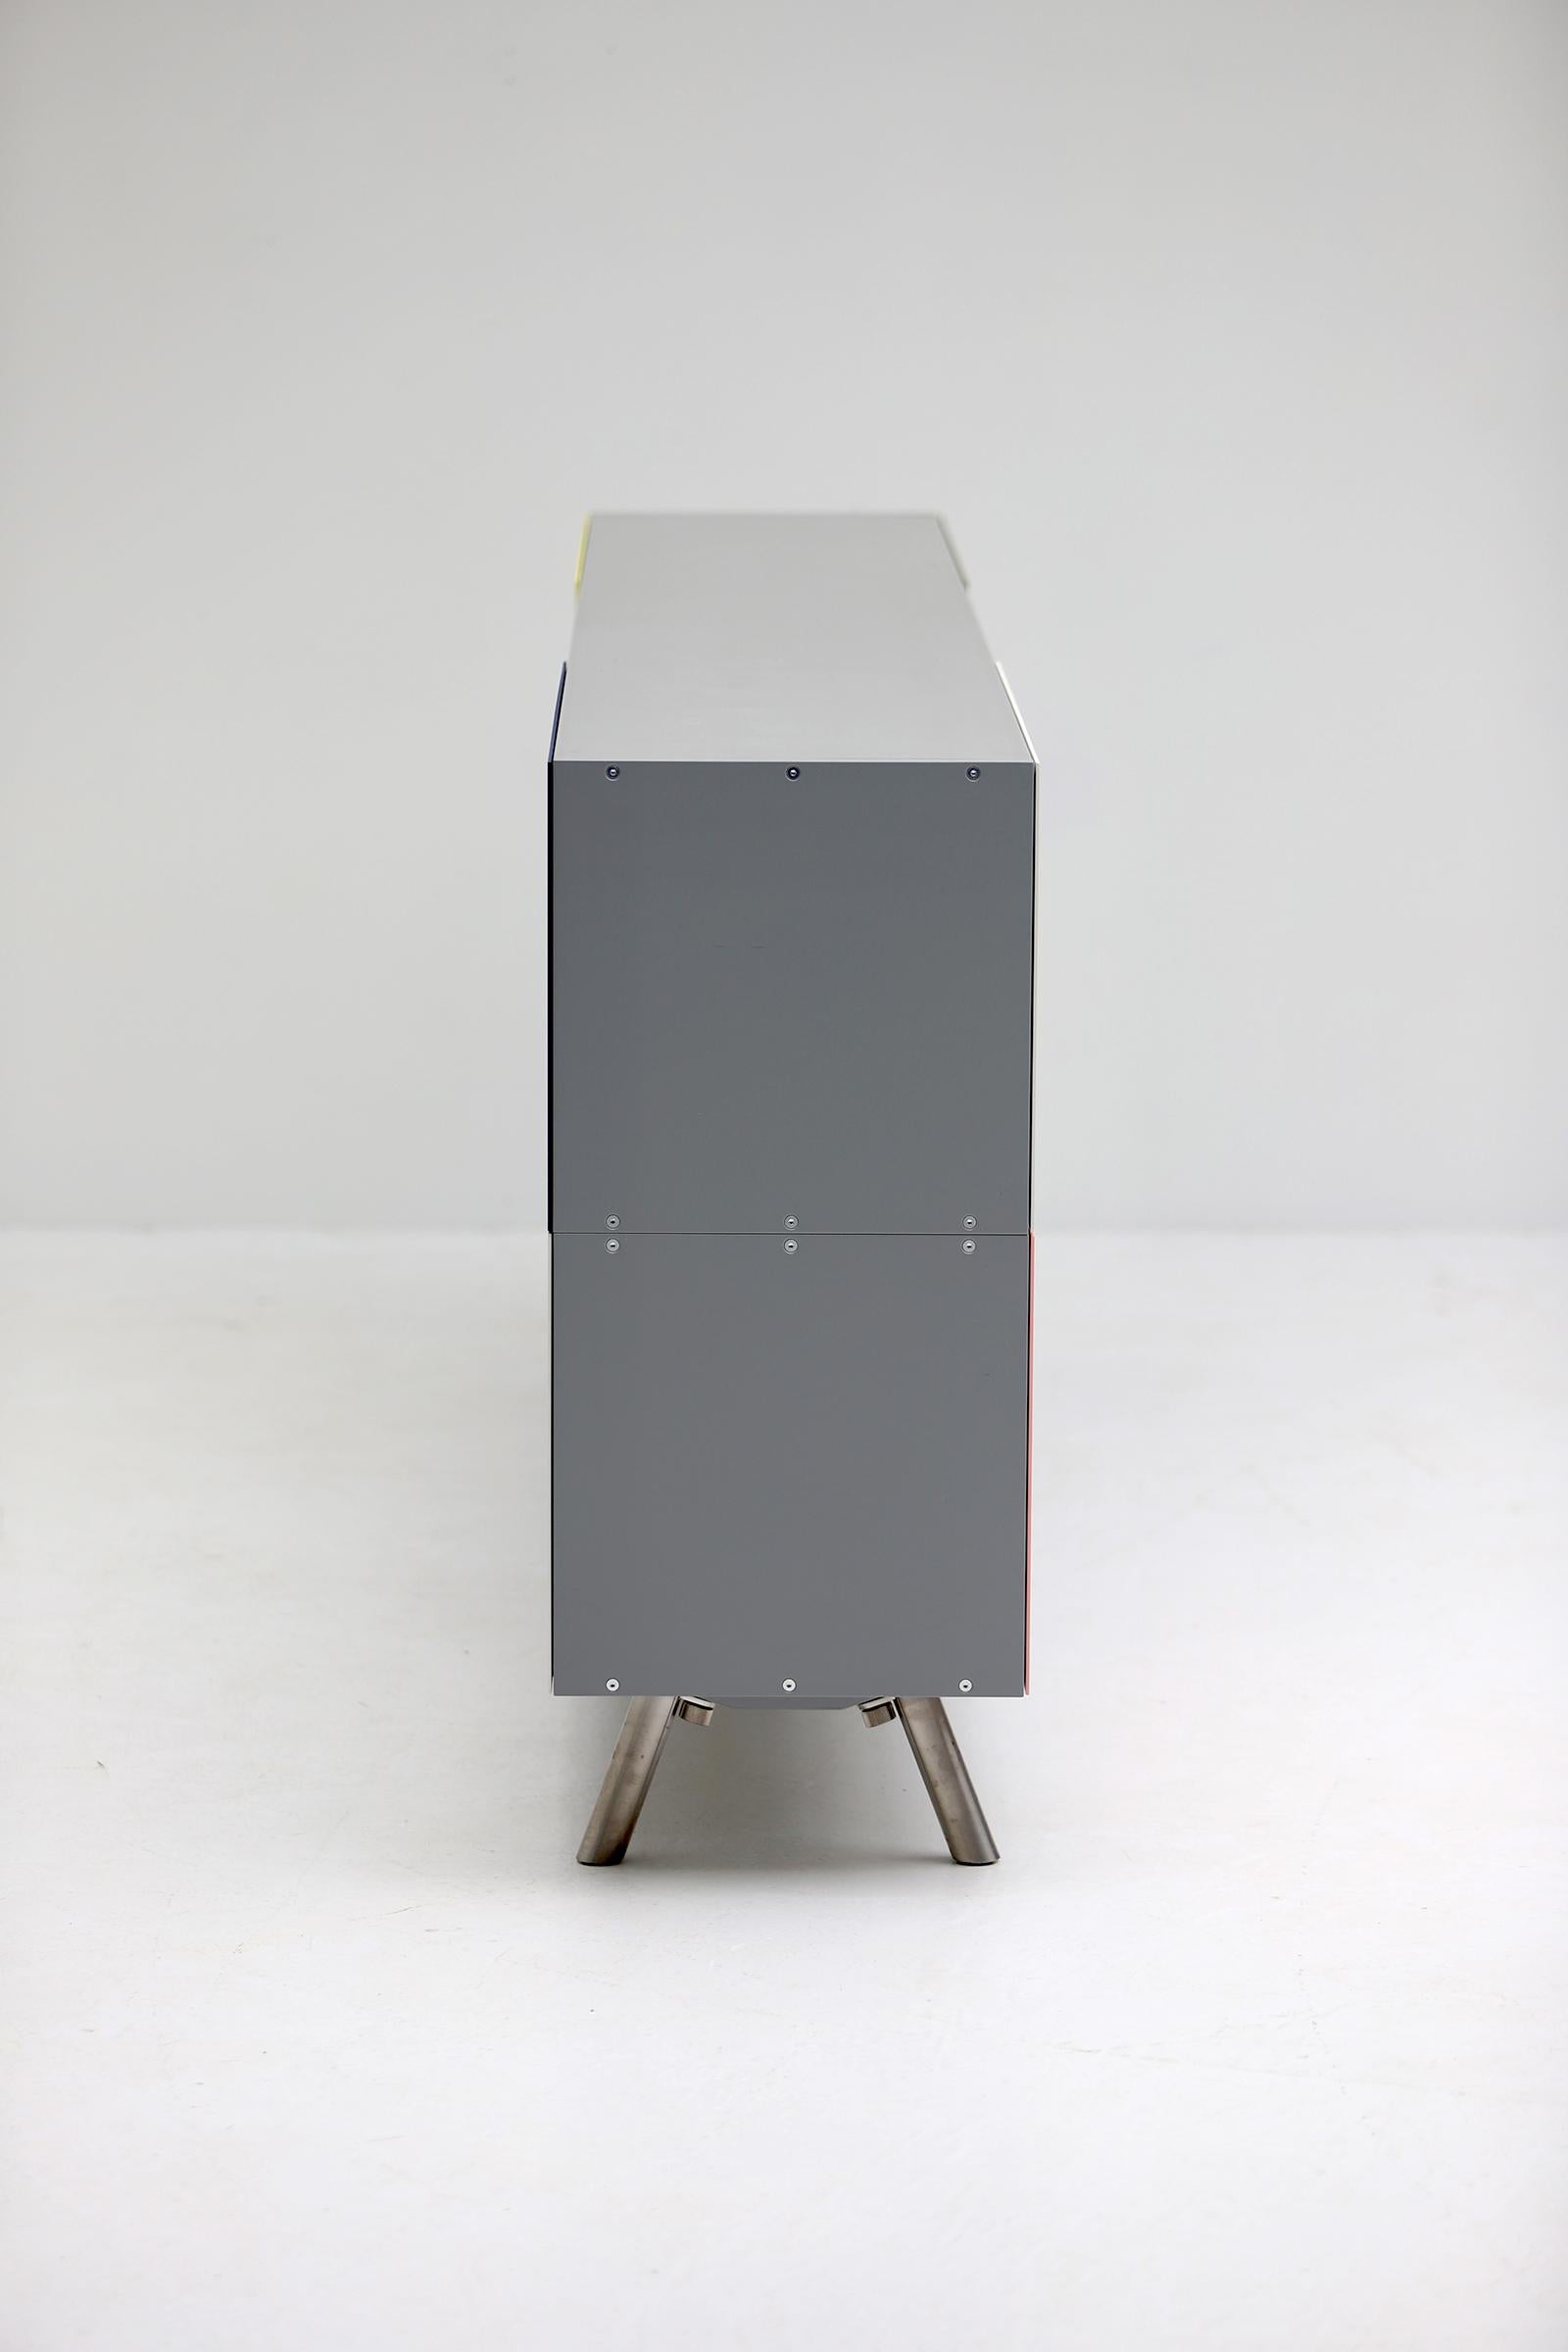 Contemporary Modern aluminium sideboard by Maarten Van Severen model Hk-2 Kast for Vitra 2005 For Sale